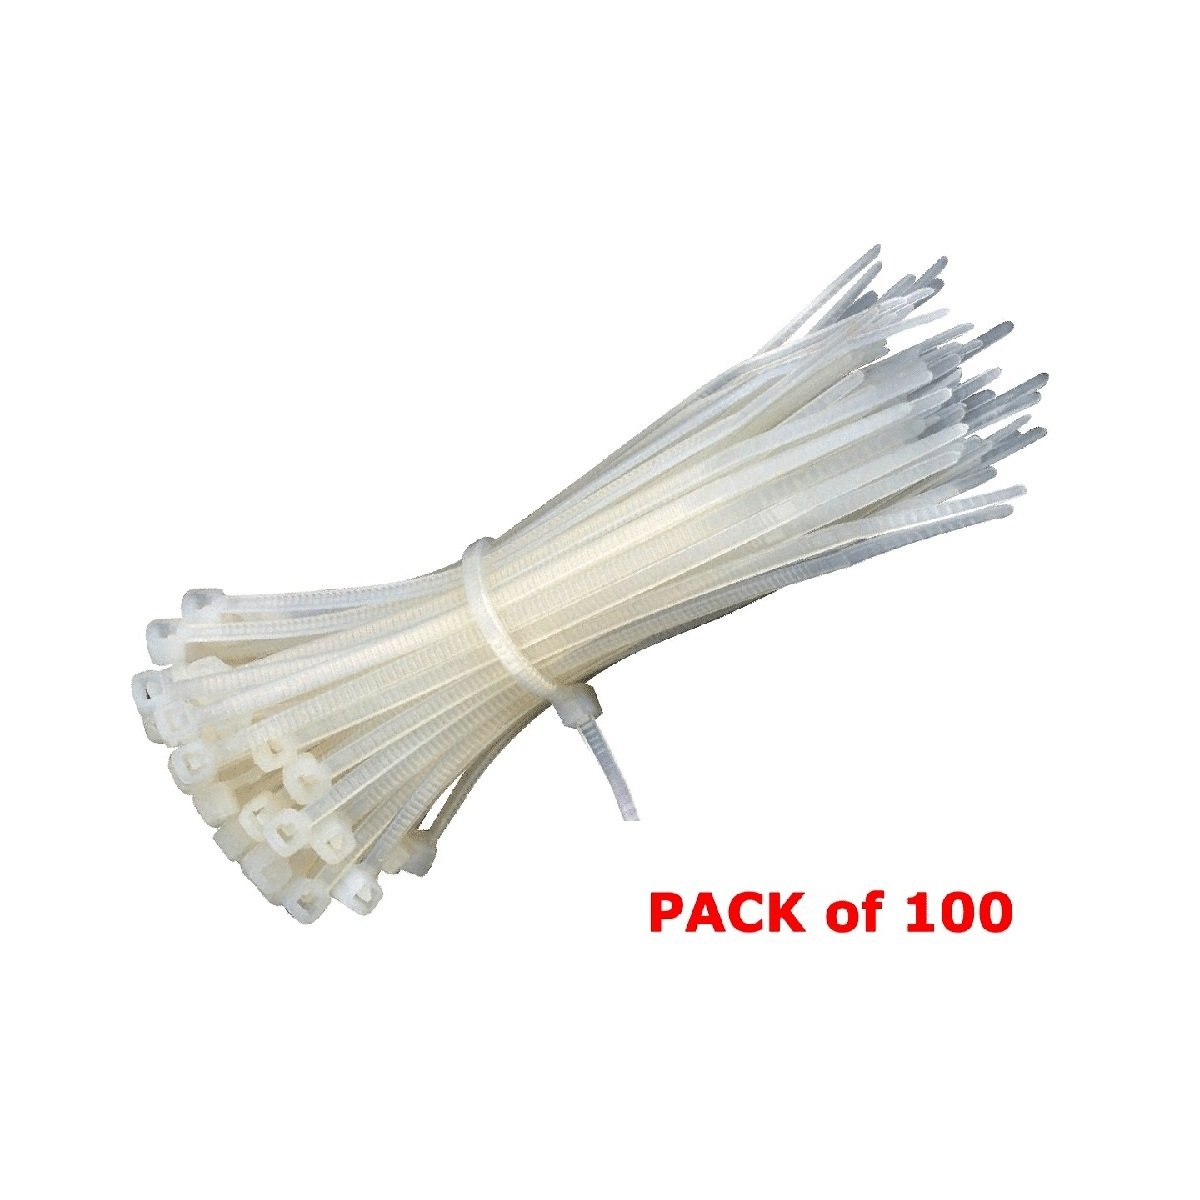 Plastic Ties 300 mm White (100pcs)